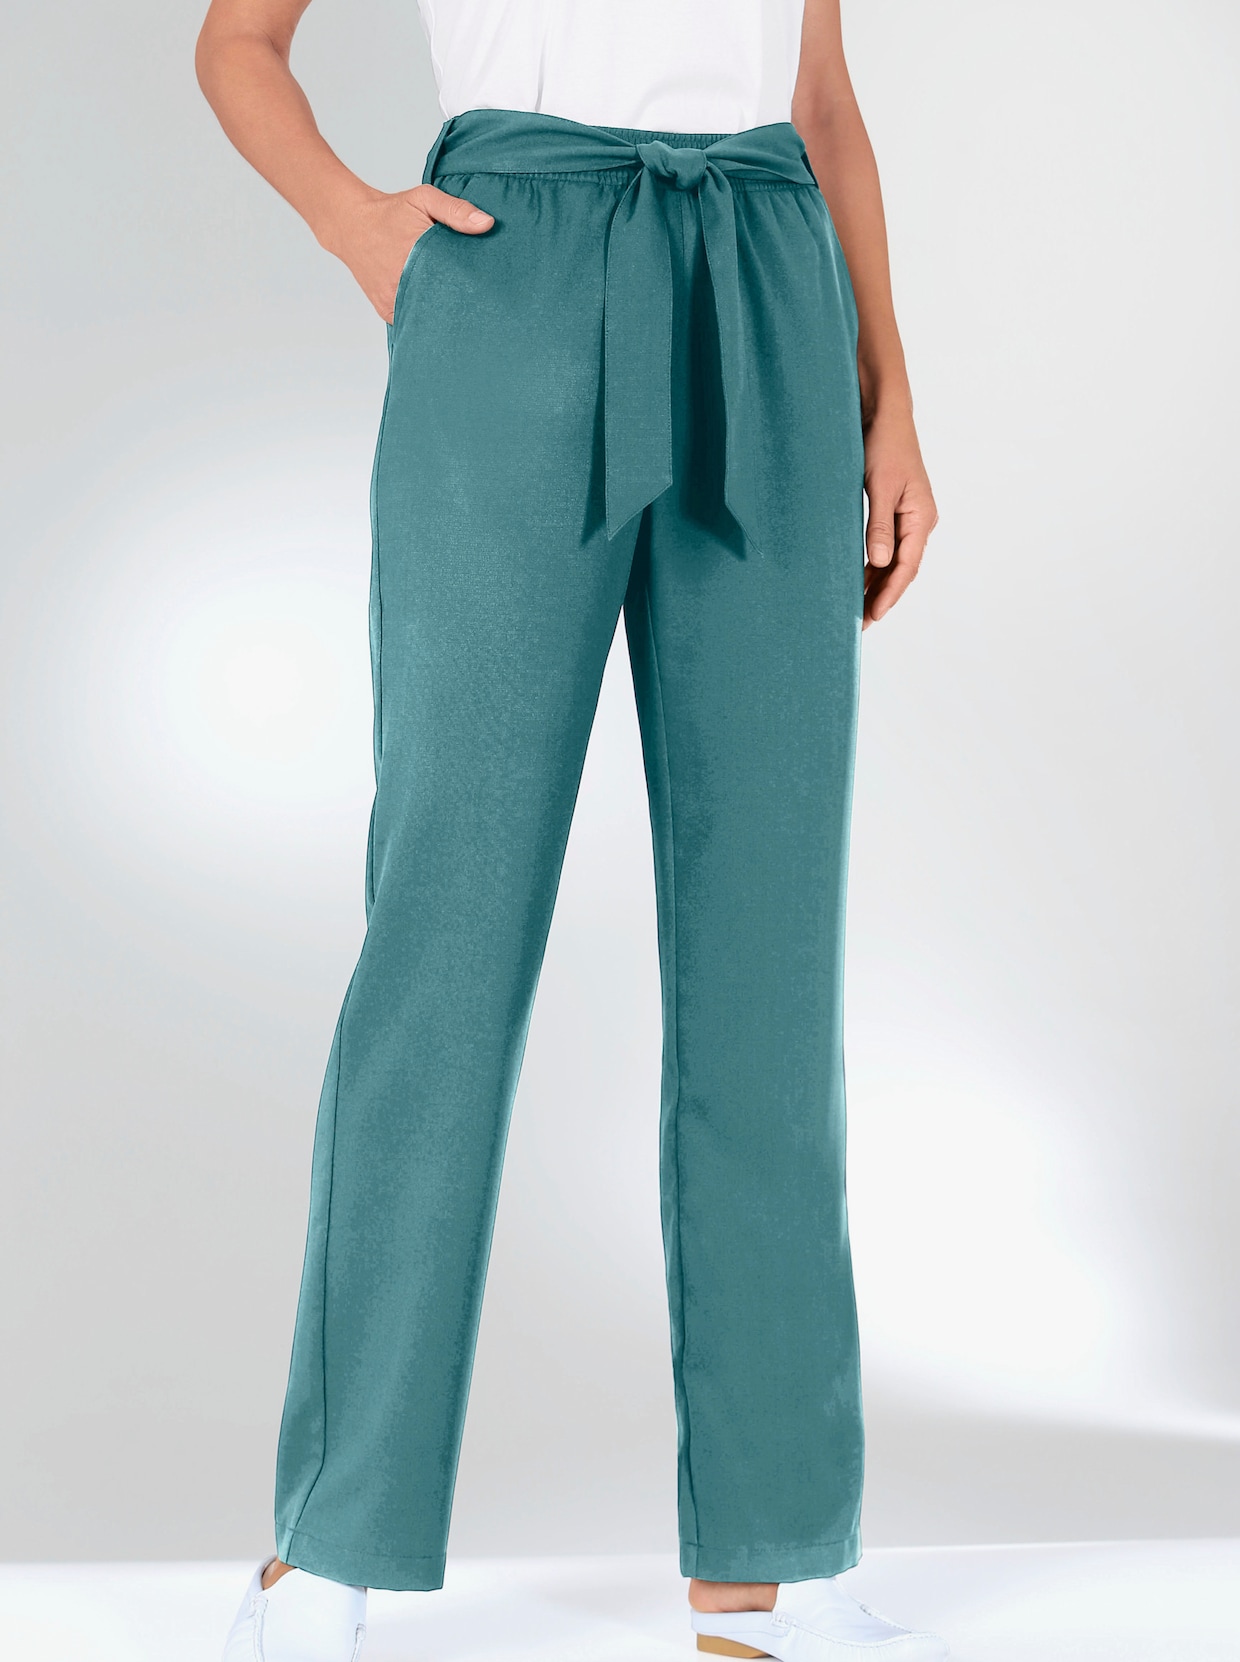 Pantalon - turquoise